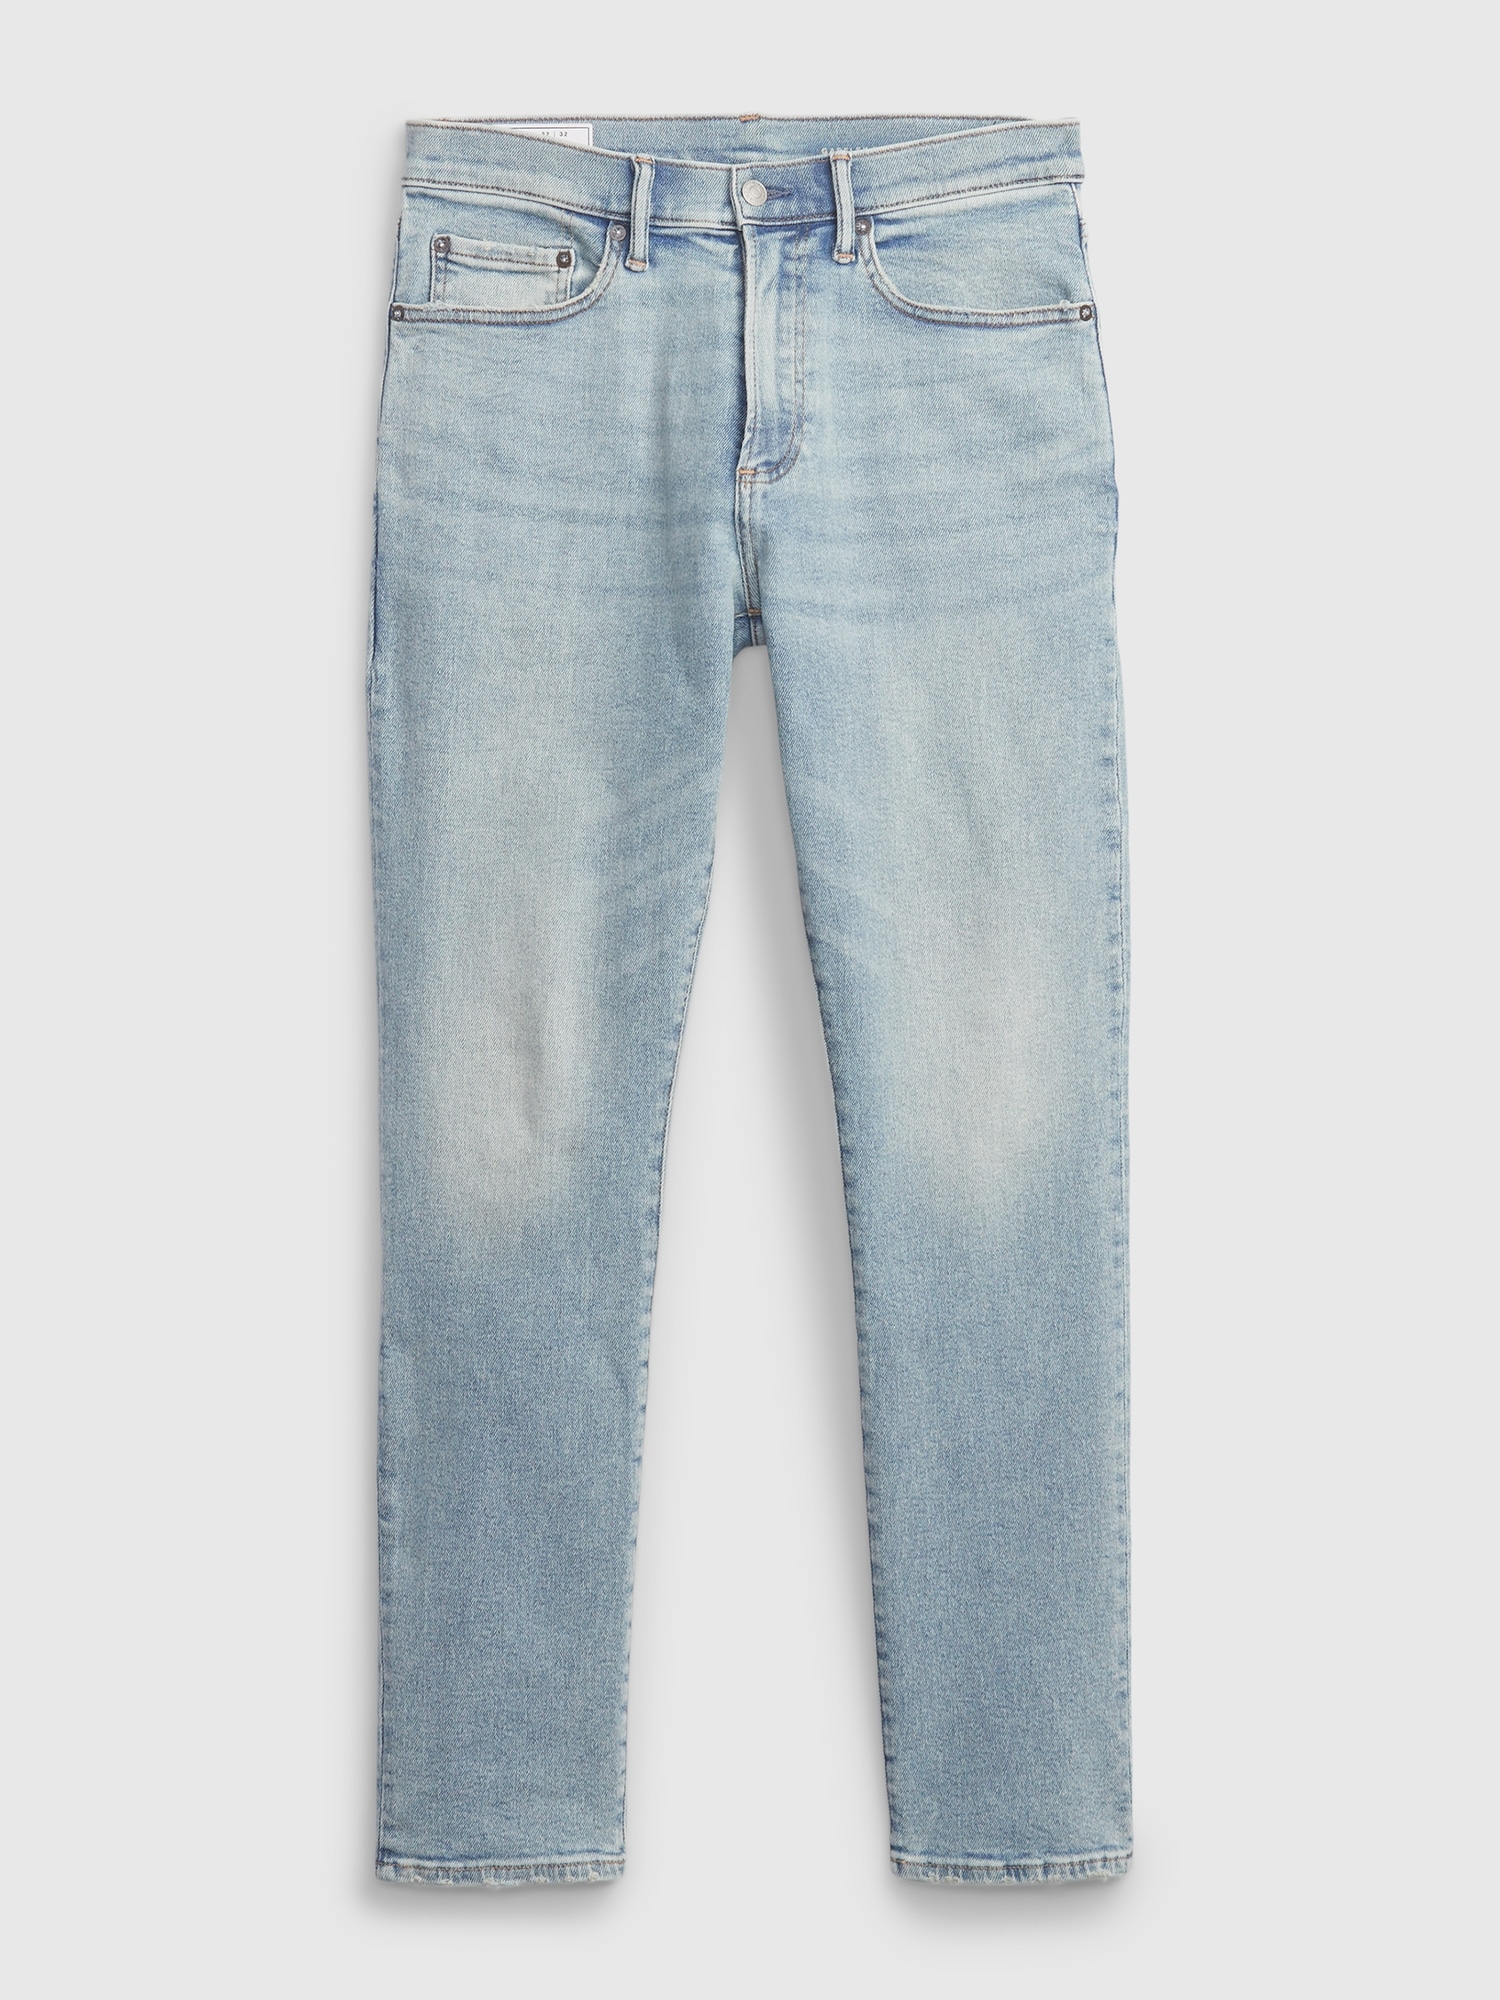 Shop Men MEDIUMWAS Skinny GapFlex Soft Wear Max Jeans with Washwell -  32W/30L - 244 AED in KSA